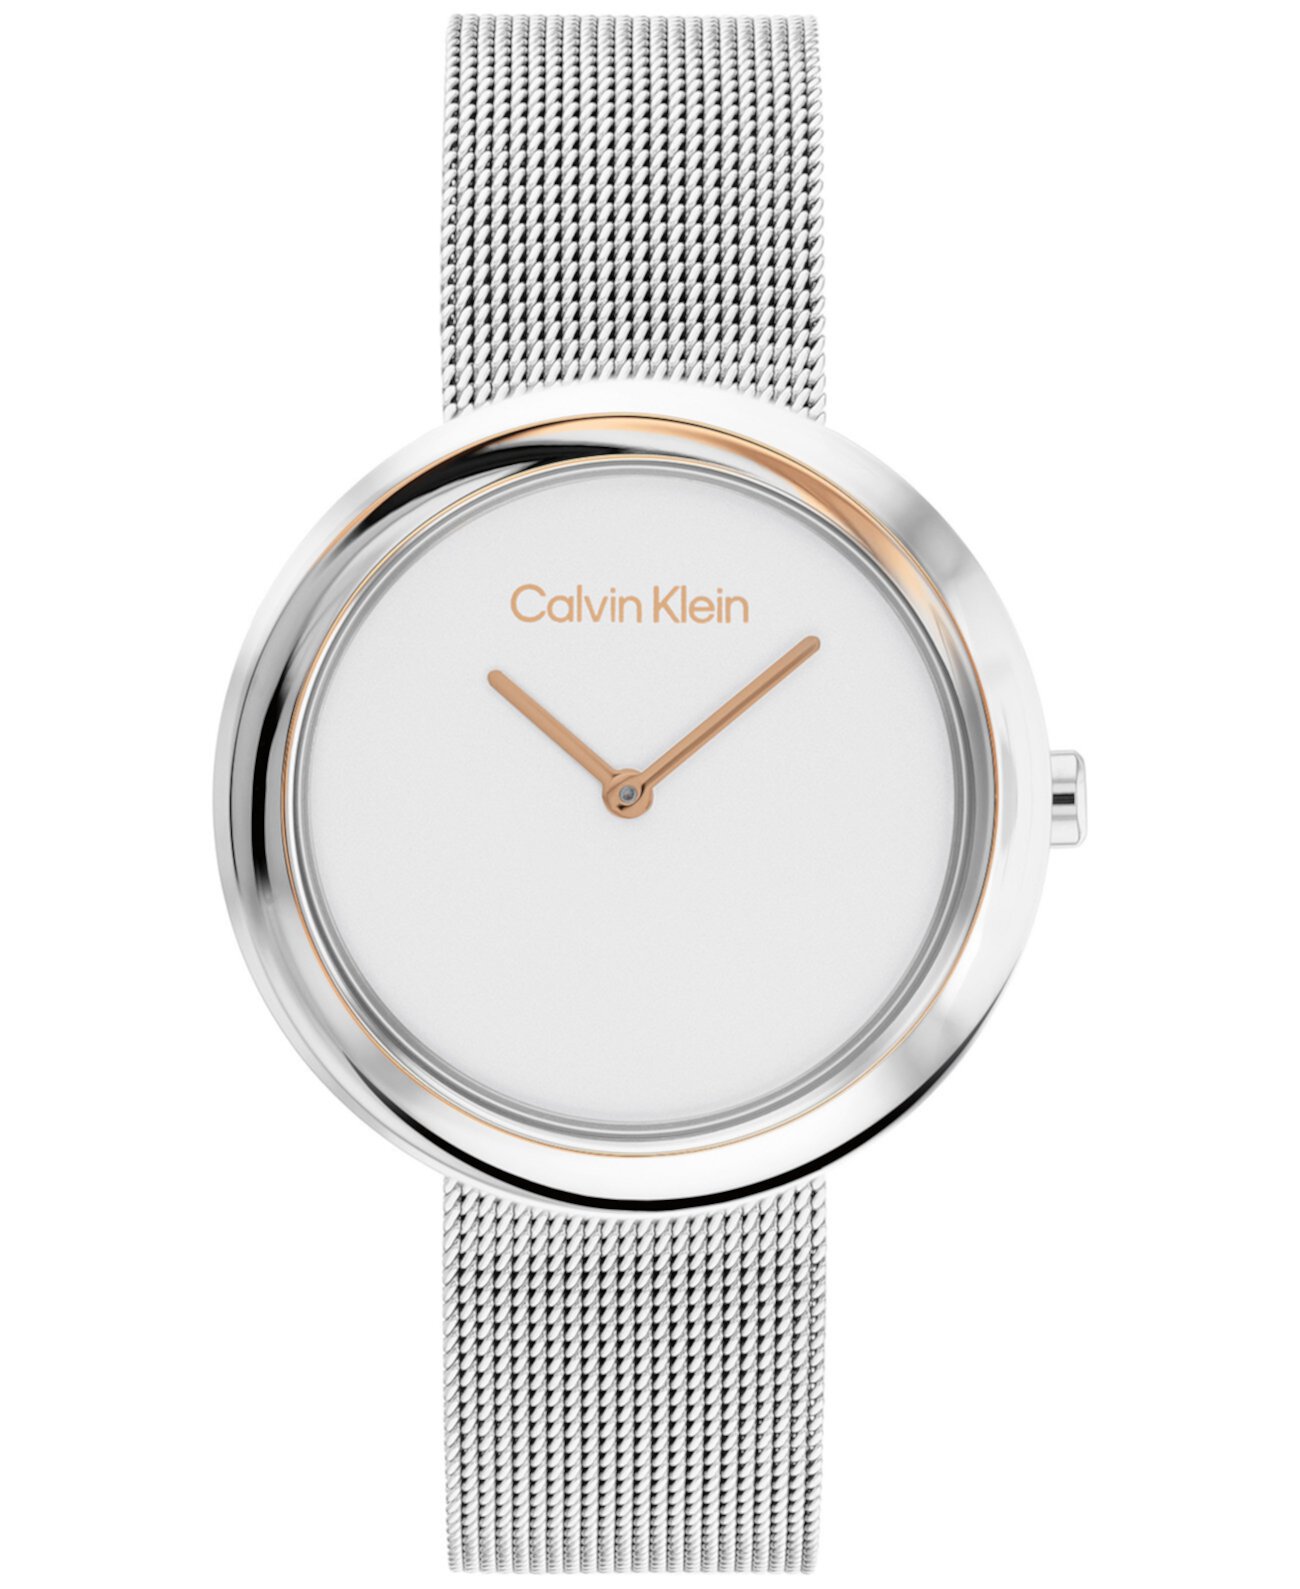 Часы-браслет из нержавеющей стали 34 мм Calvin Klein